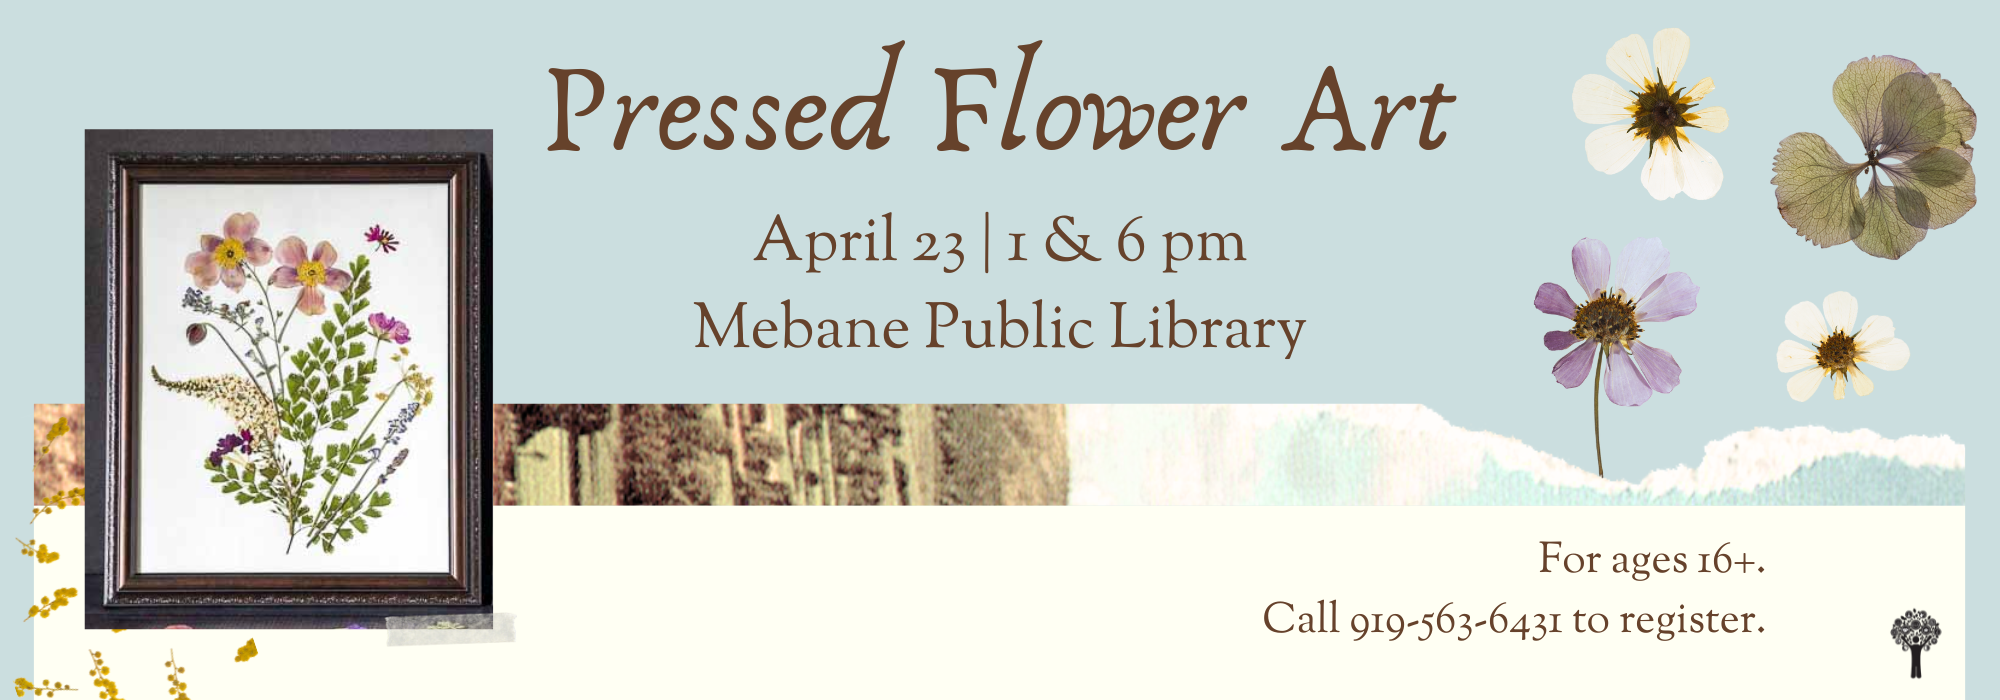 4.23 at 1 & 6 pm - Pressed Flower Craft at Mebane